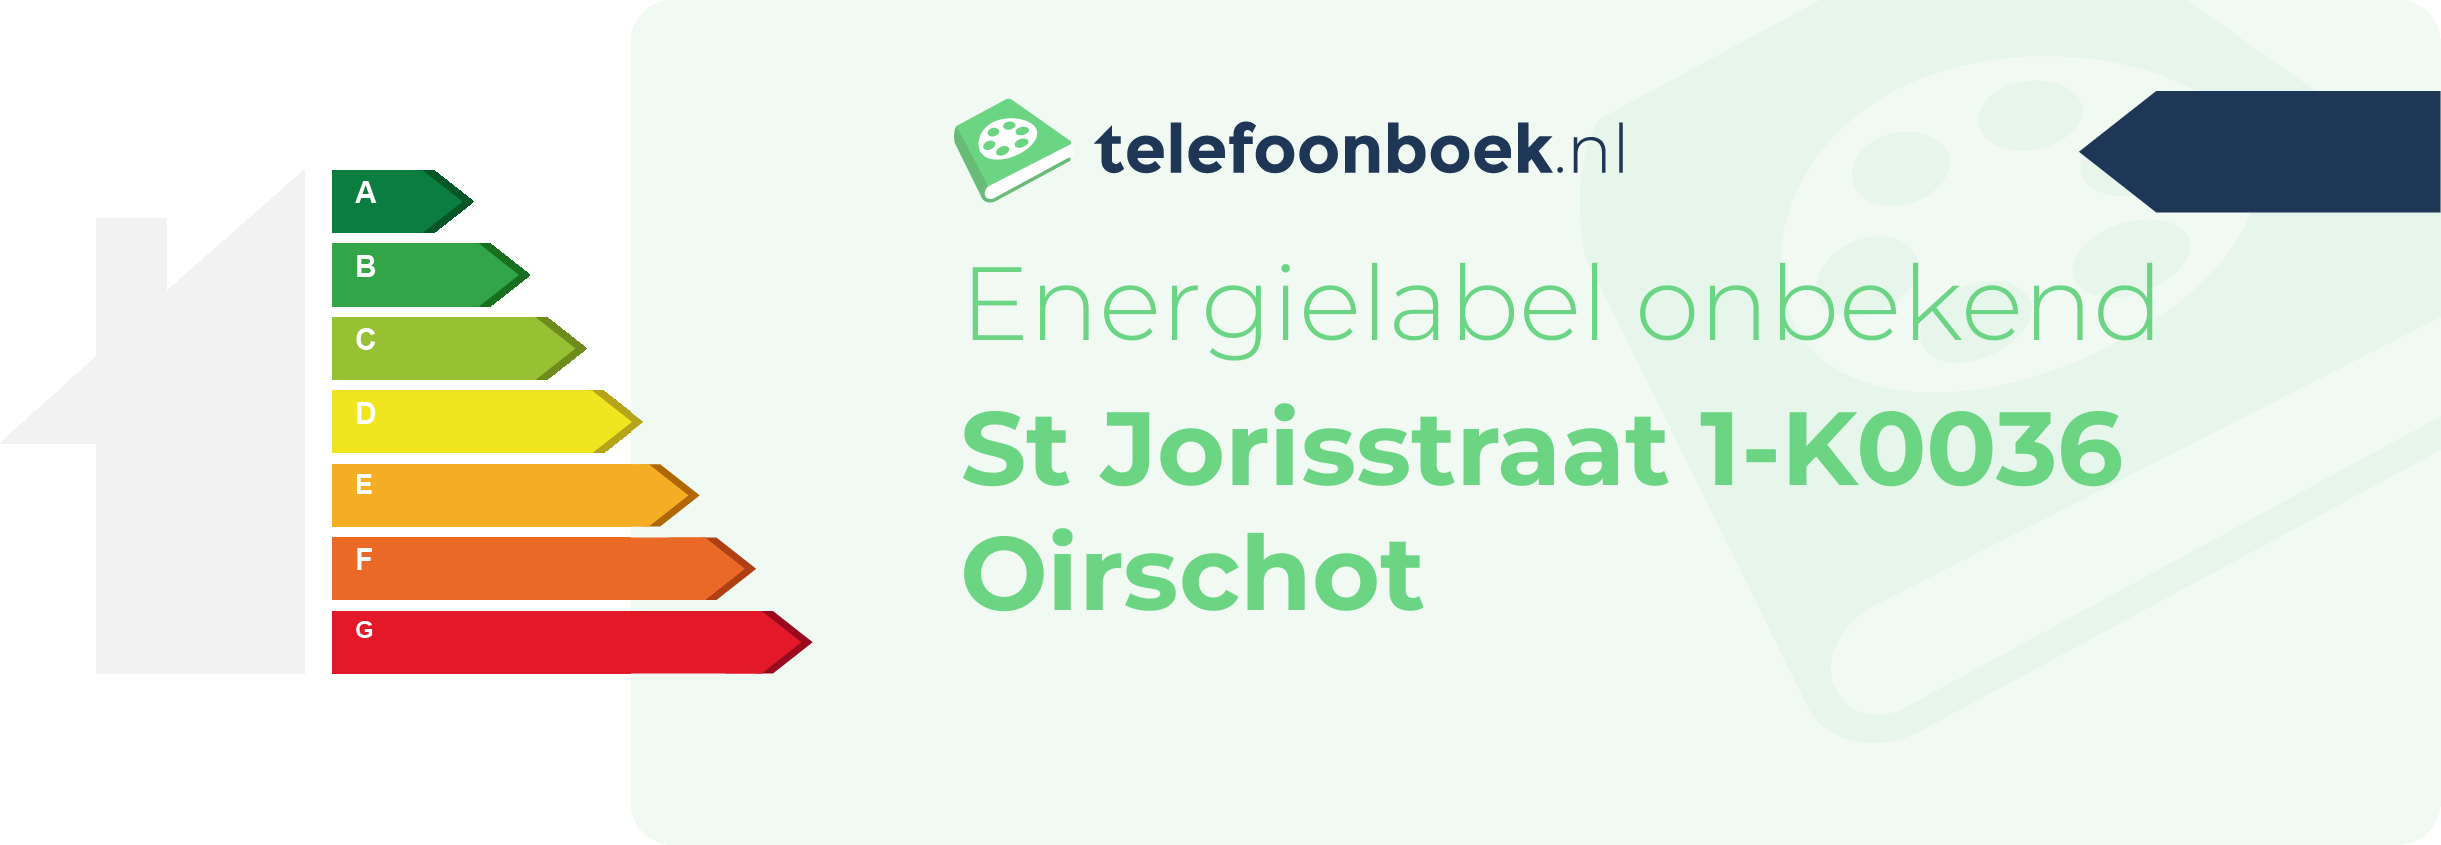 Energielabel St Jorisstraat 1-K0036 Oirschot